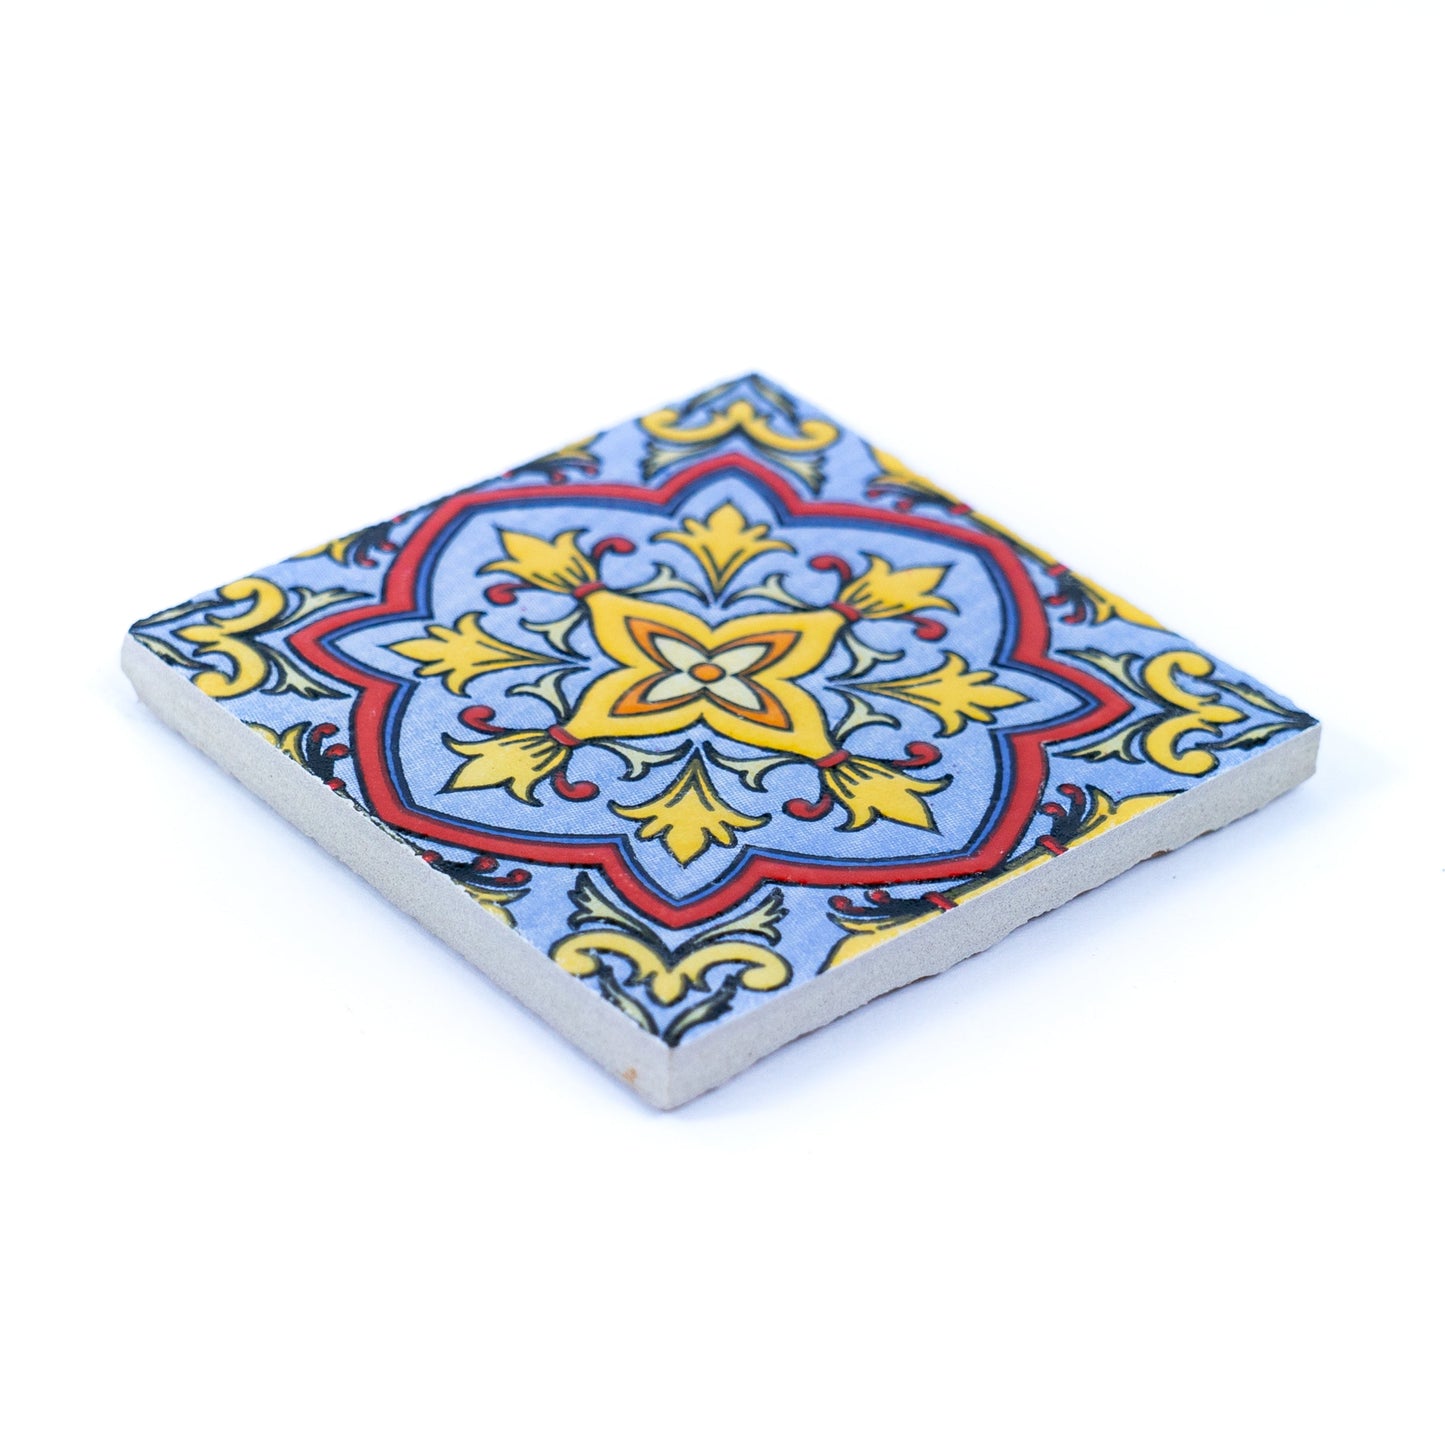 Set of 6 Elegant Portuguese Tile Ceramic & Cork Coasters L-038